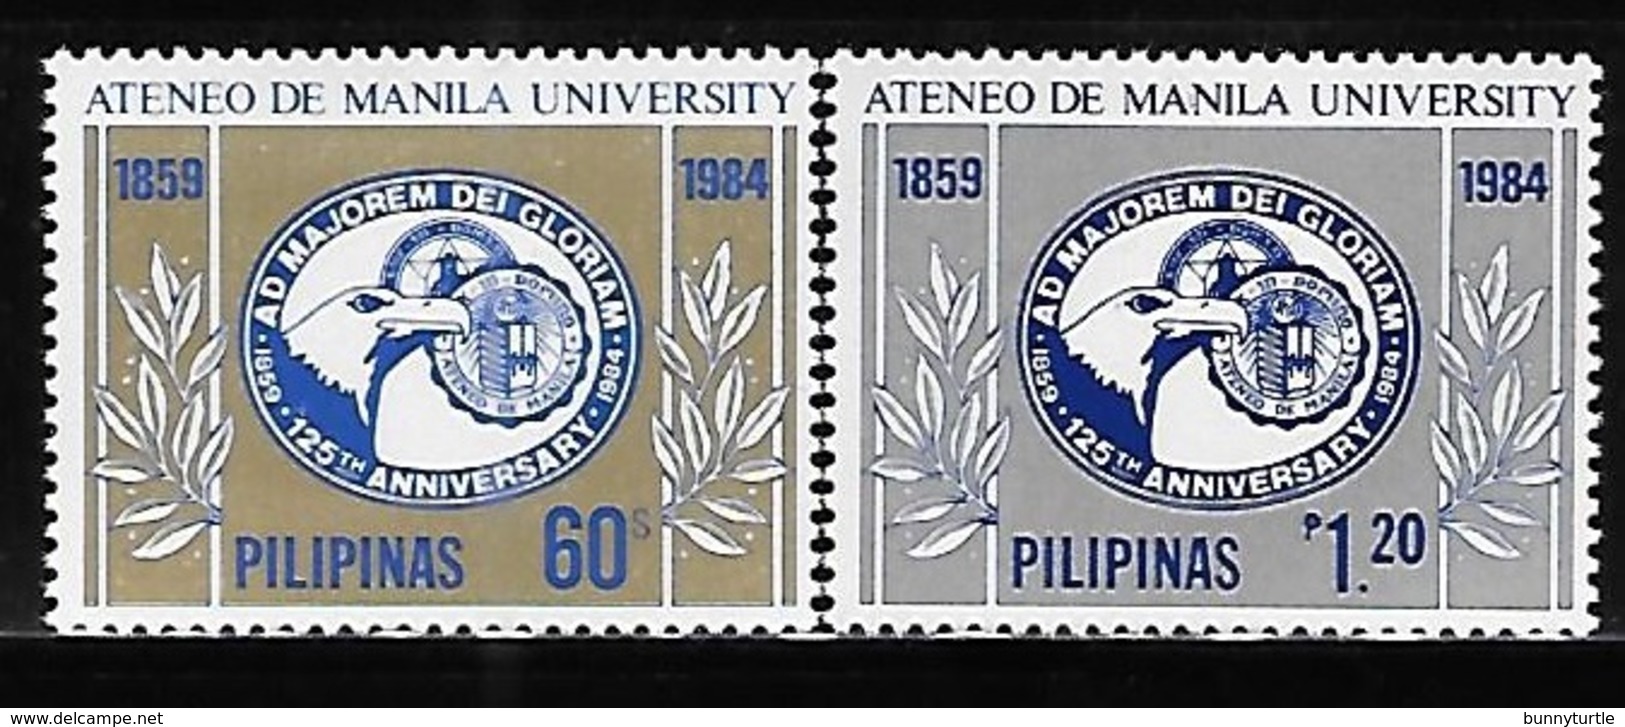 Philippines 1984 Ateneo De Manila University MNH - Filippine